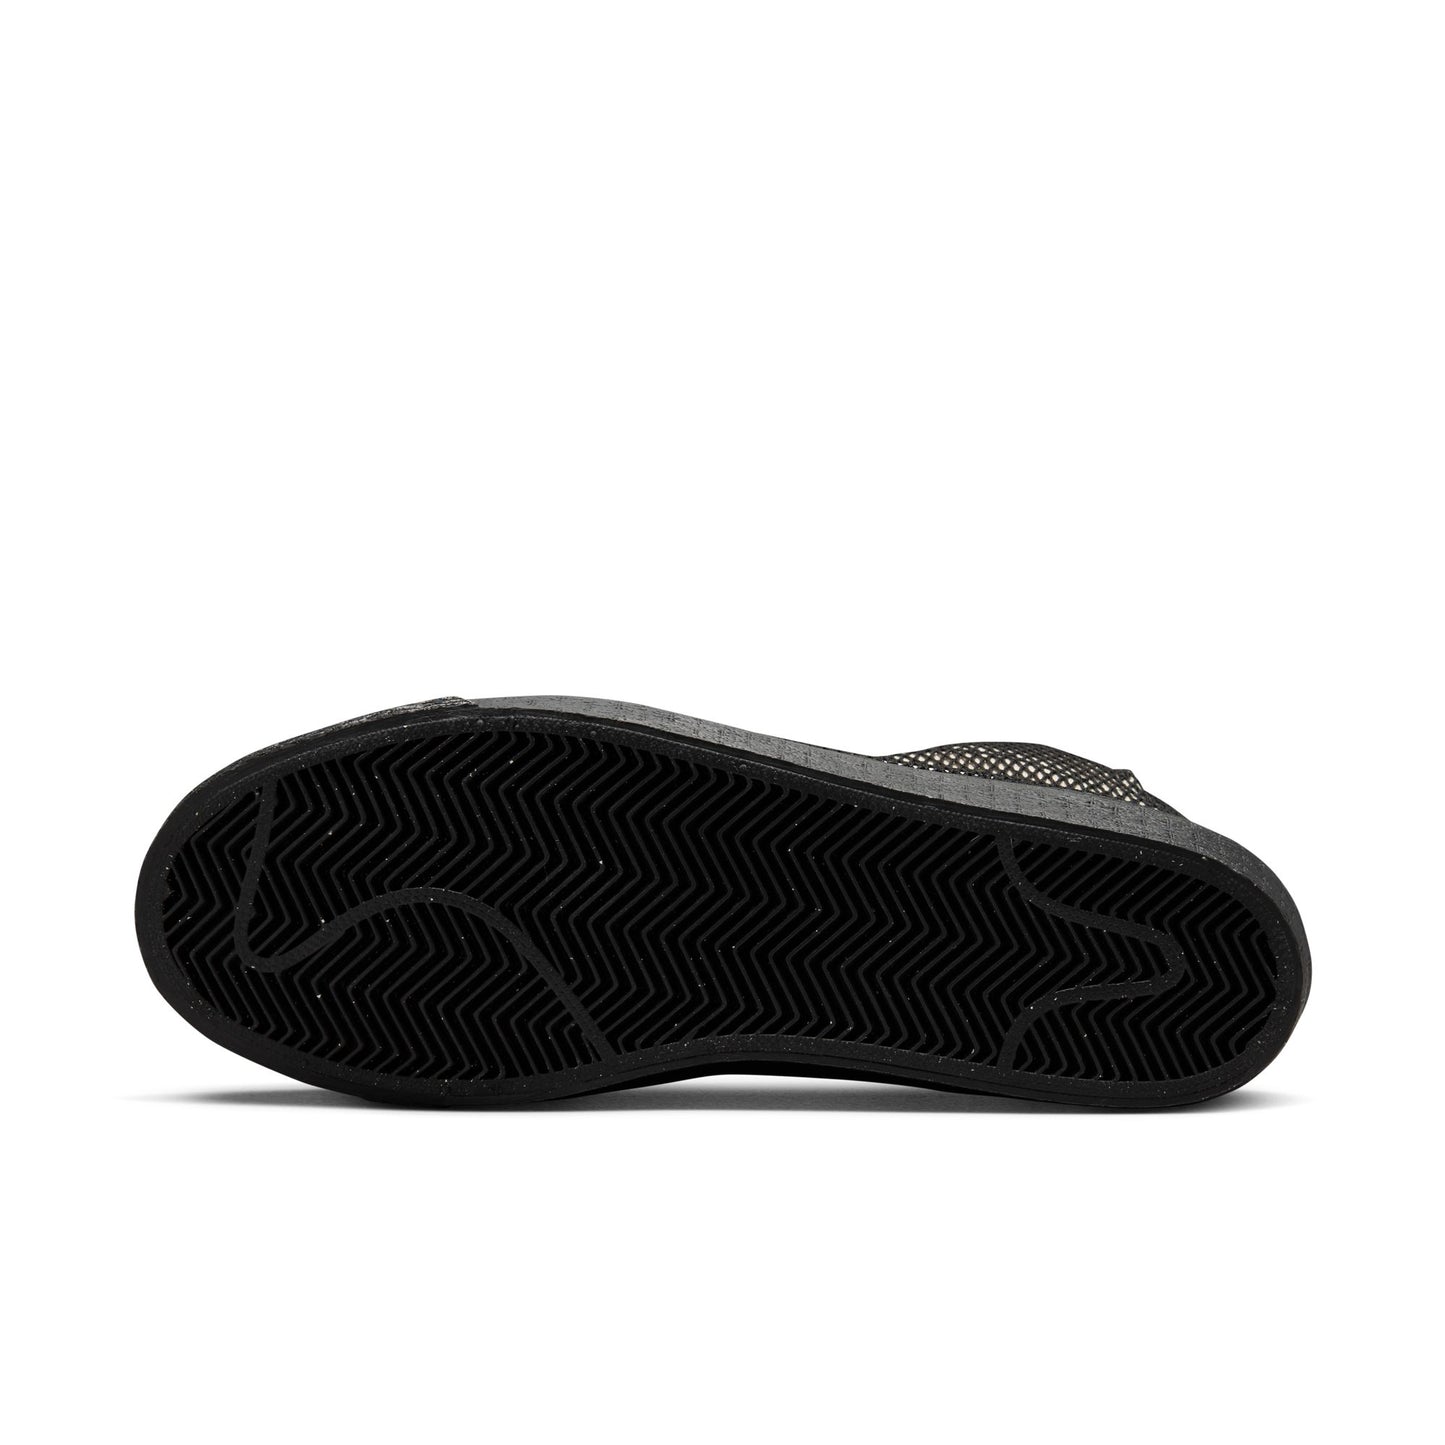 Nike SB Blazer Mid Premium white black white black